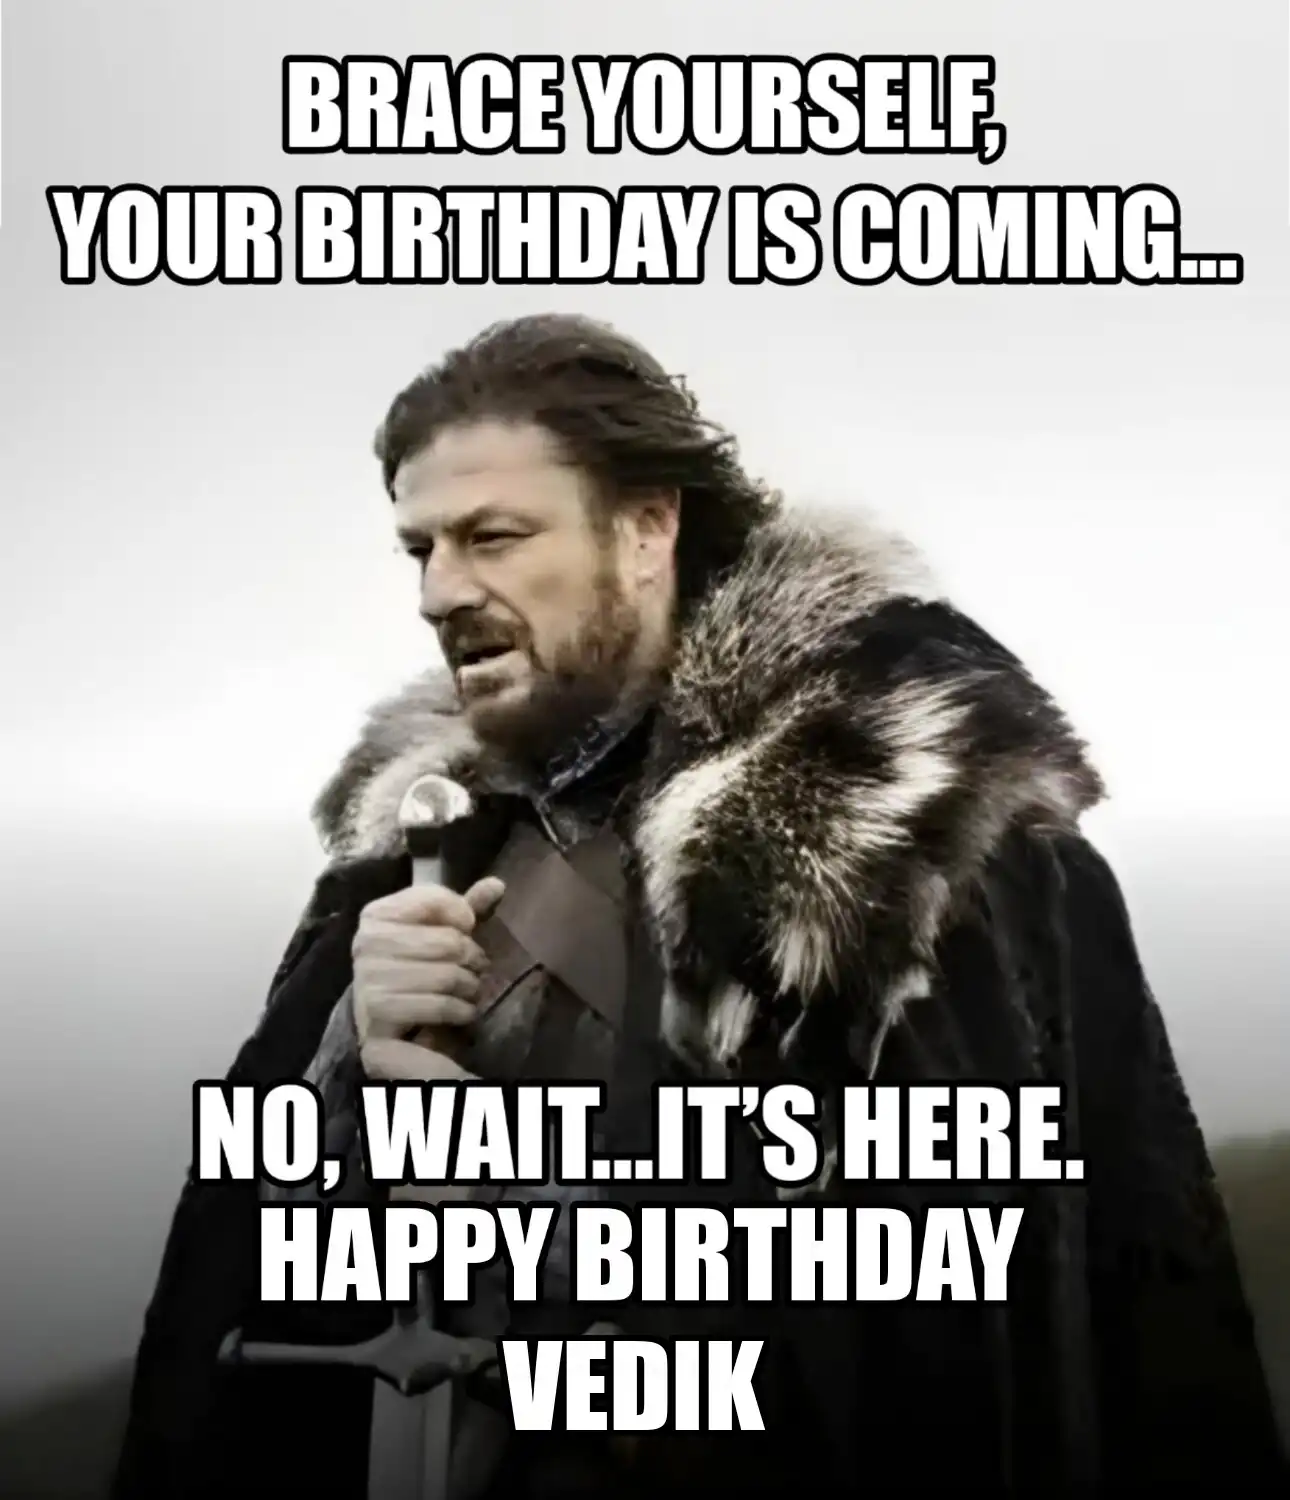 Happy Birthday Vedik Brace Yourself Your Birthday Is Coming Meme